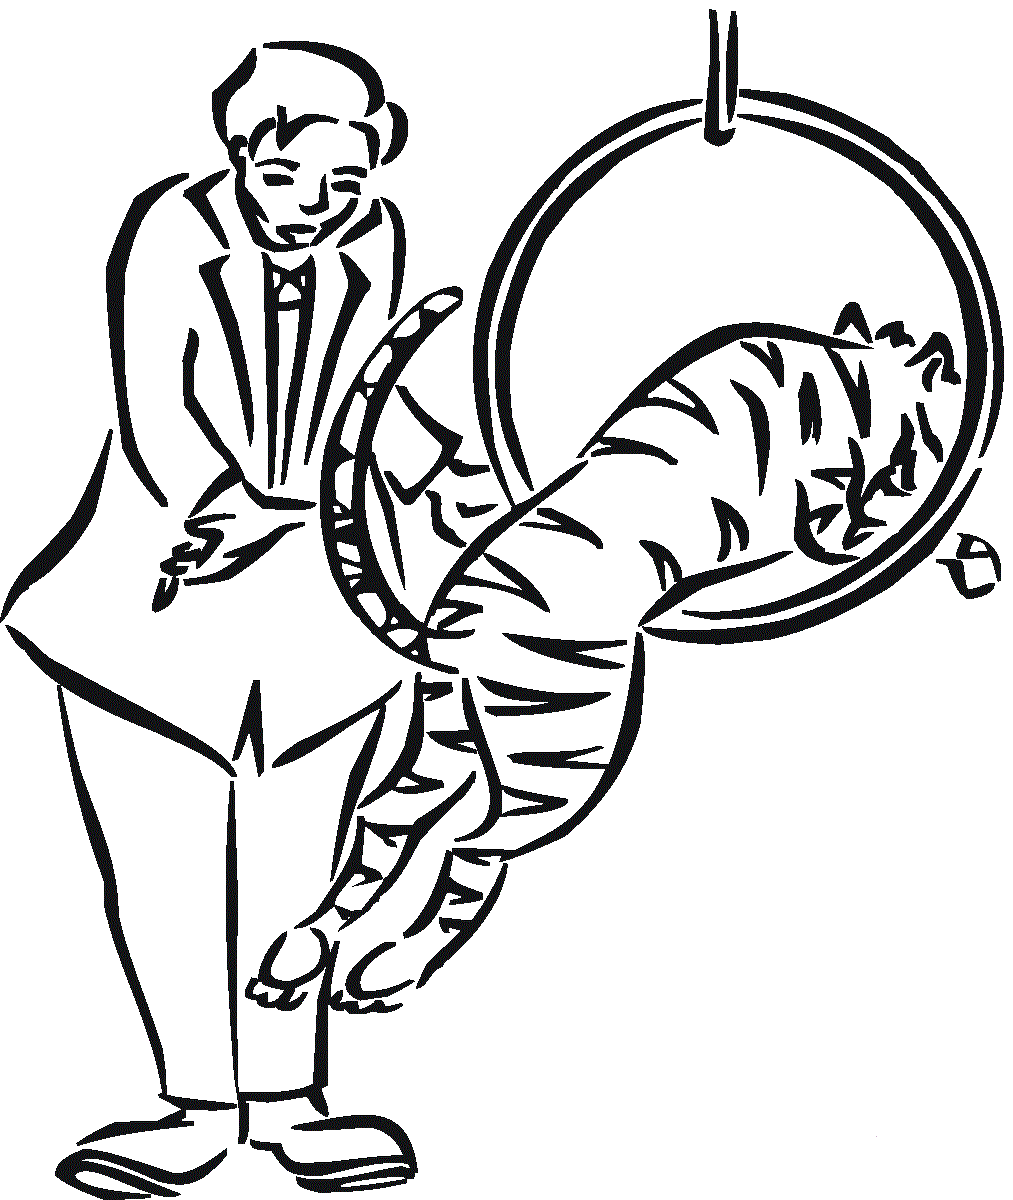 Circus Tiger coloring page